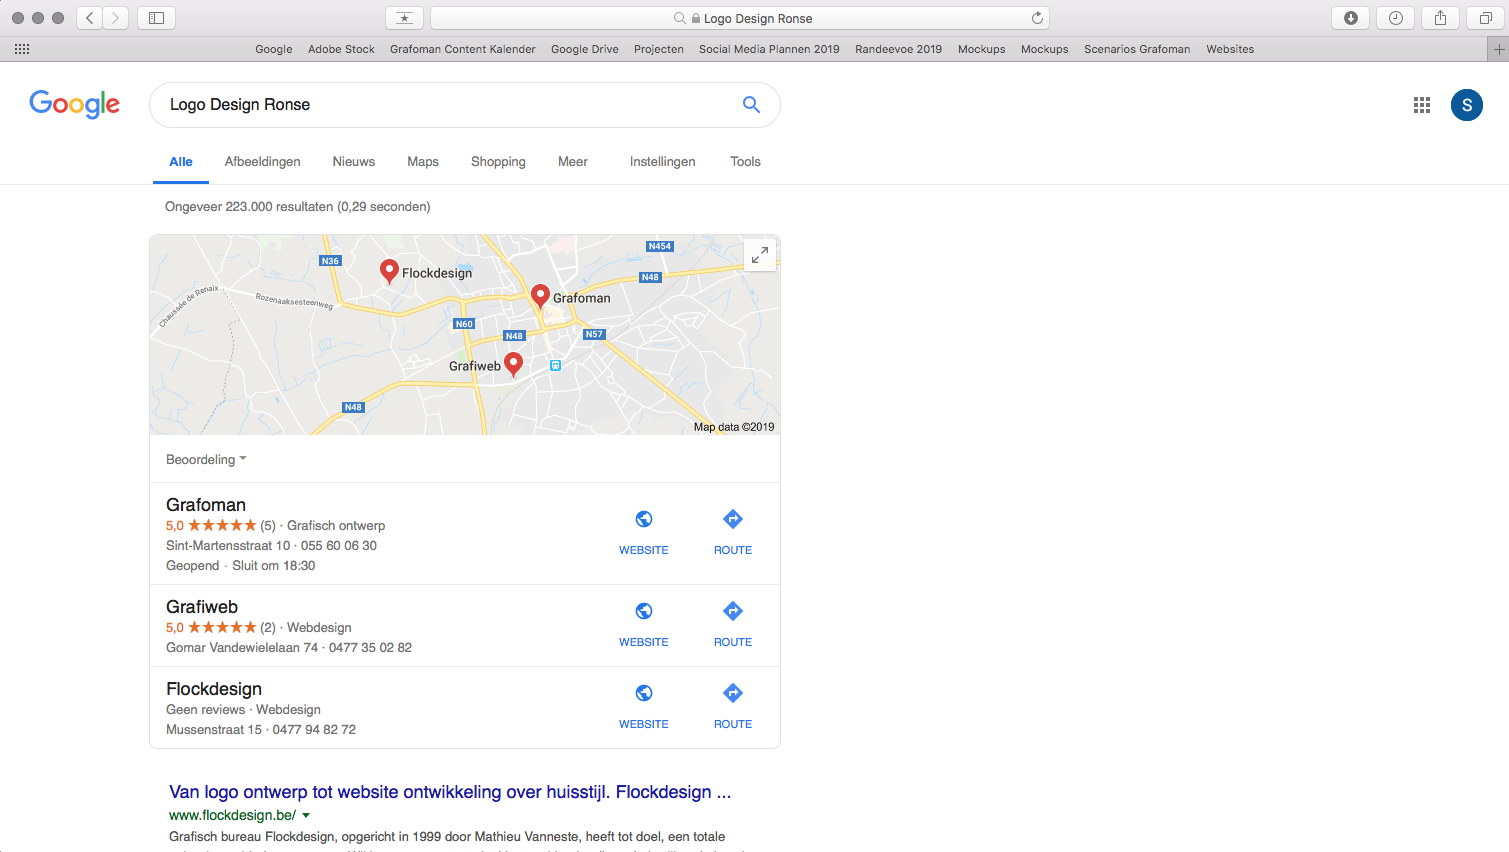 Google-Bedrijfspagina-Grafoman-Google-Maps